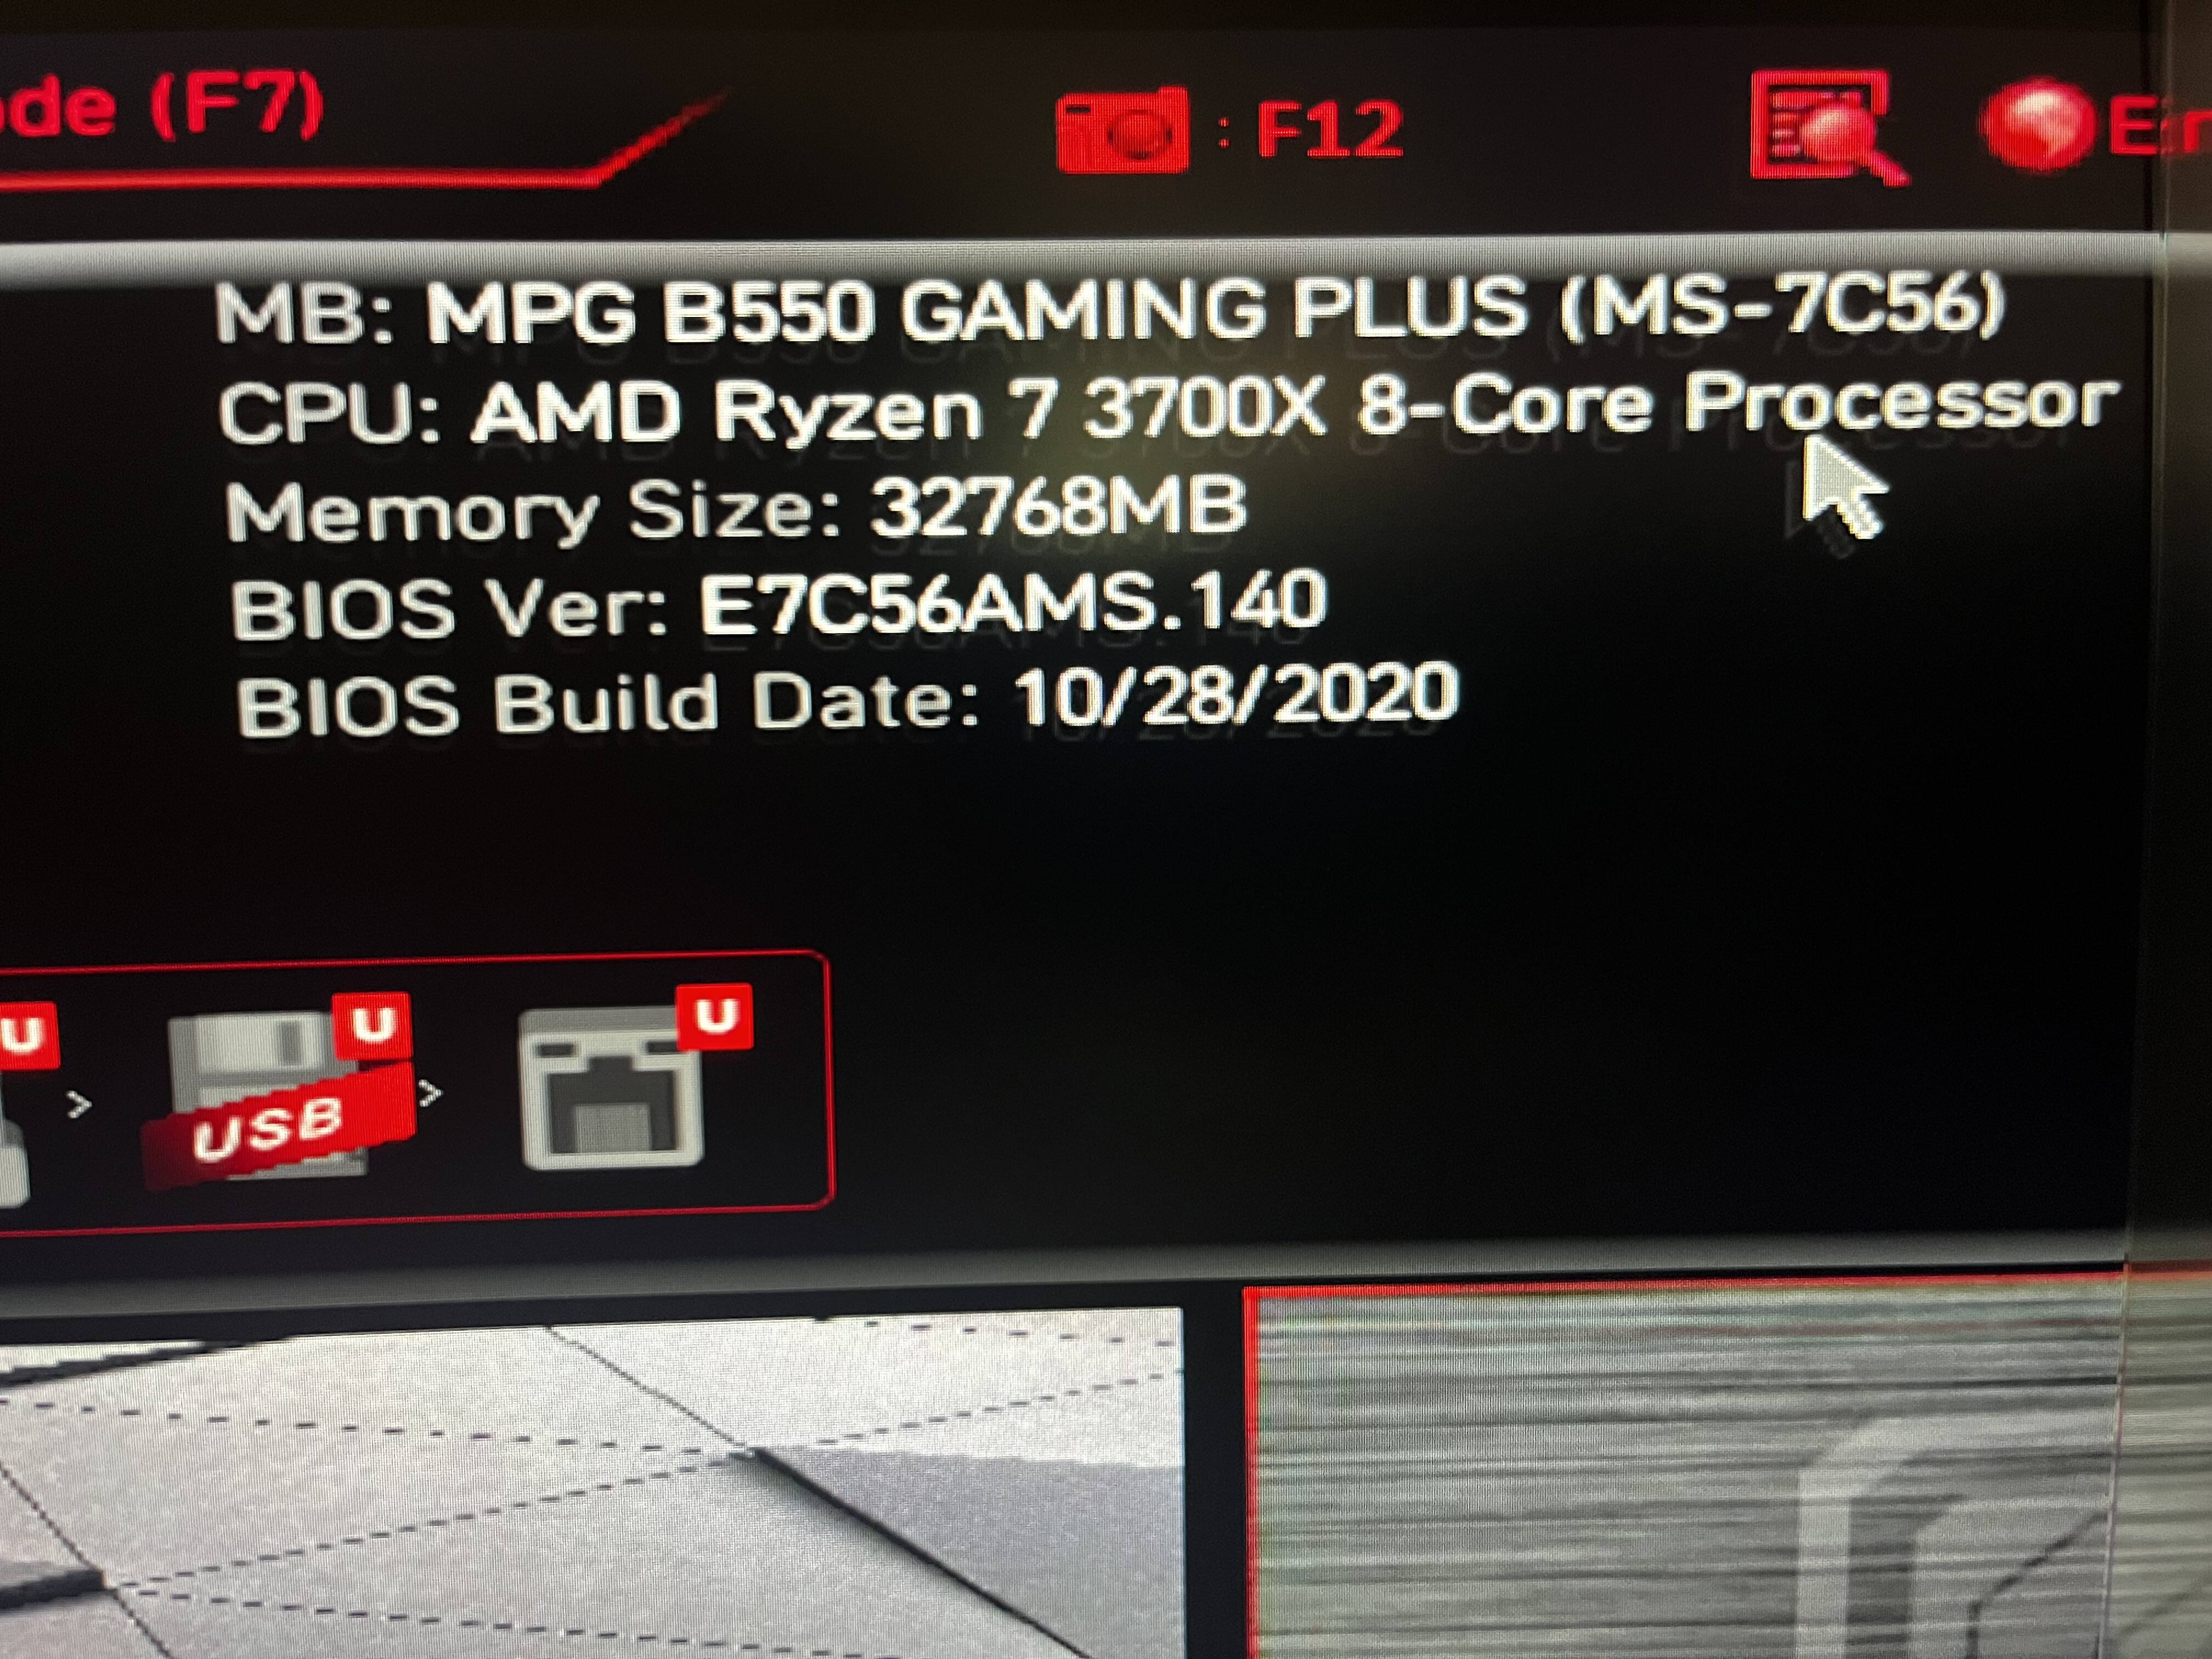 MSI MPG B550 Gaming Plus Bios version. - CPUs, Motherboards, and Memory -  Linus Tech Tips